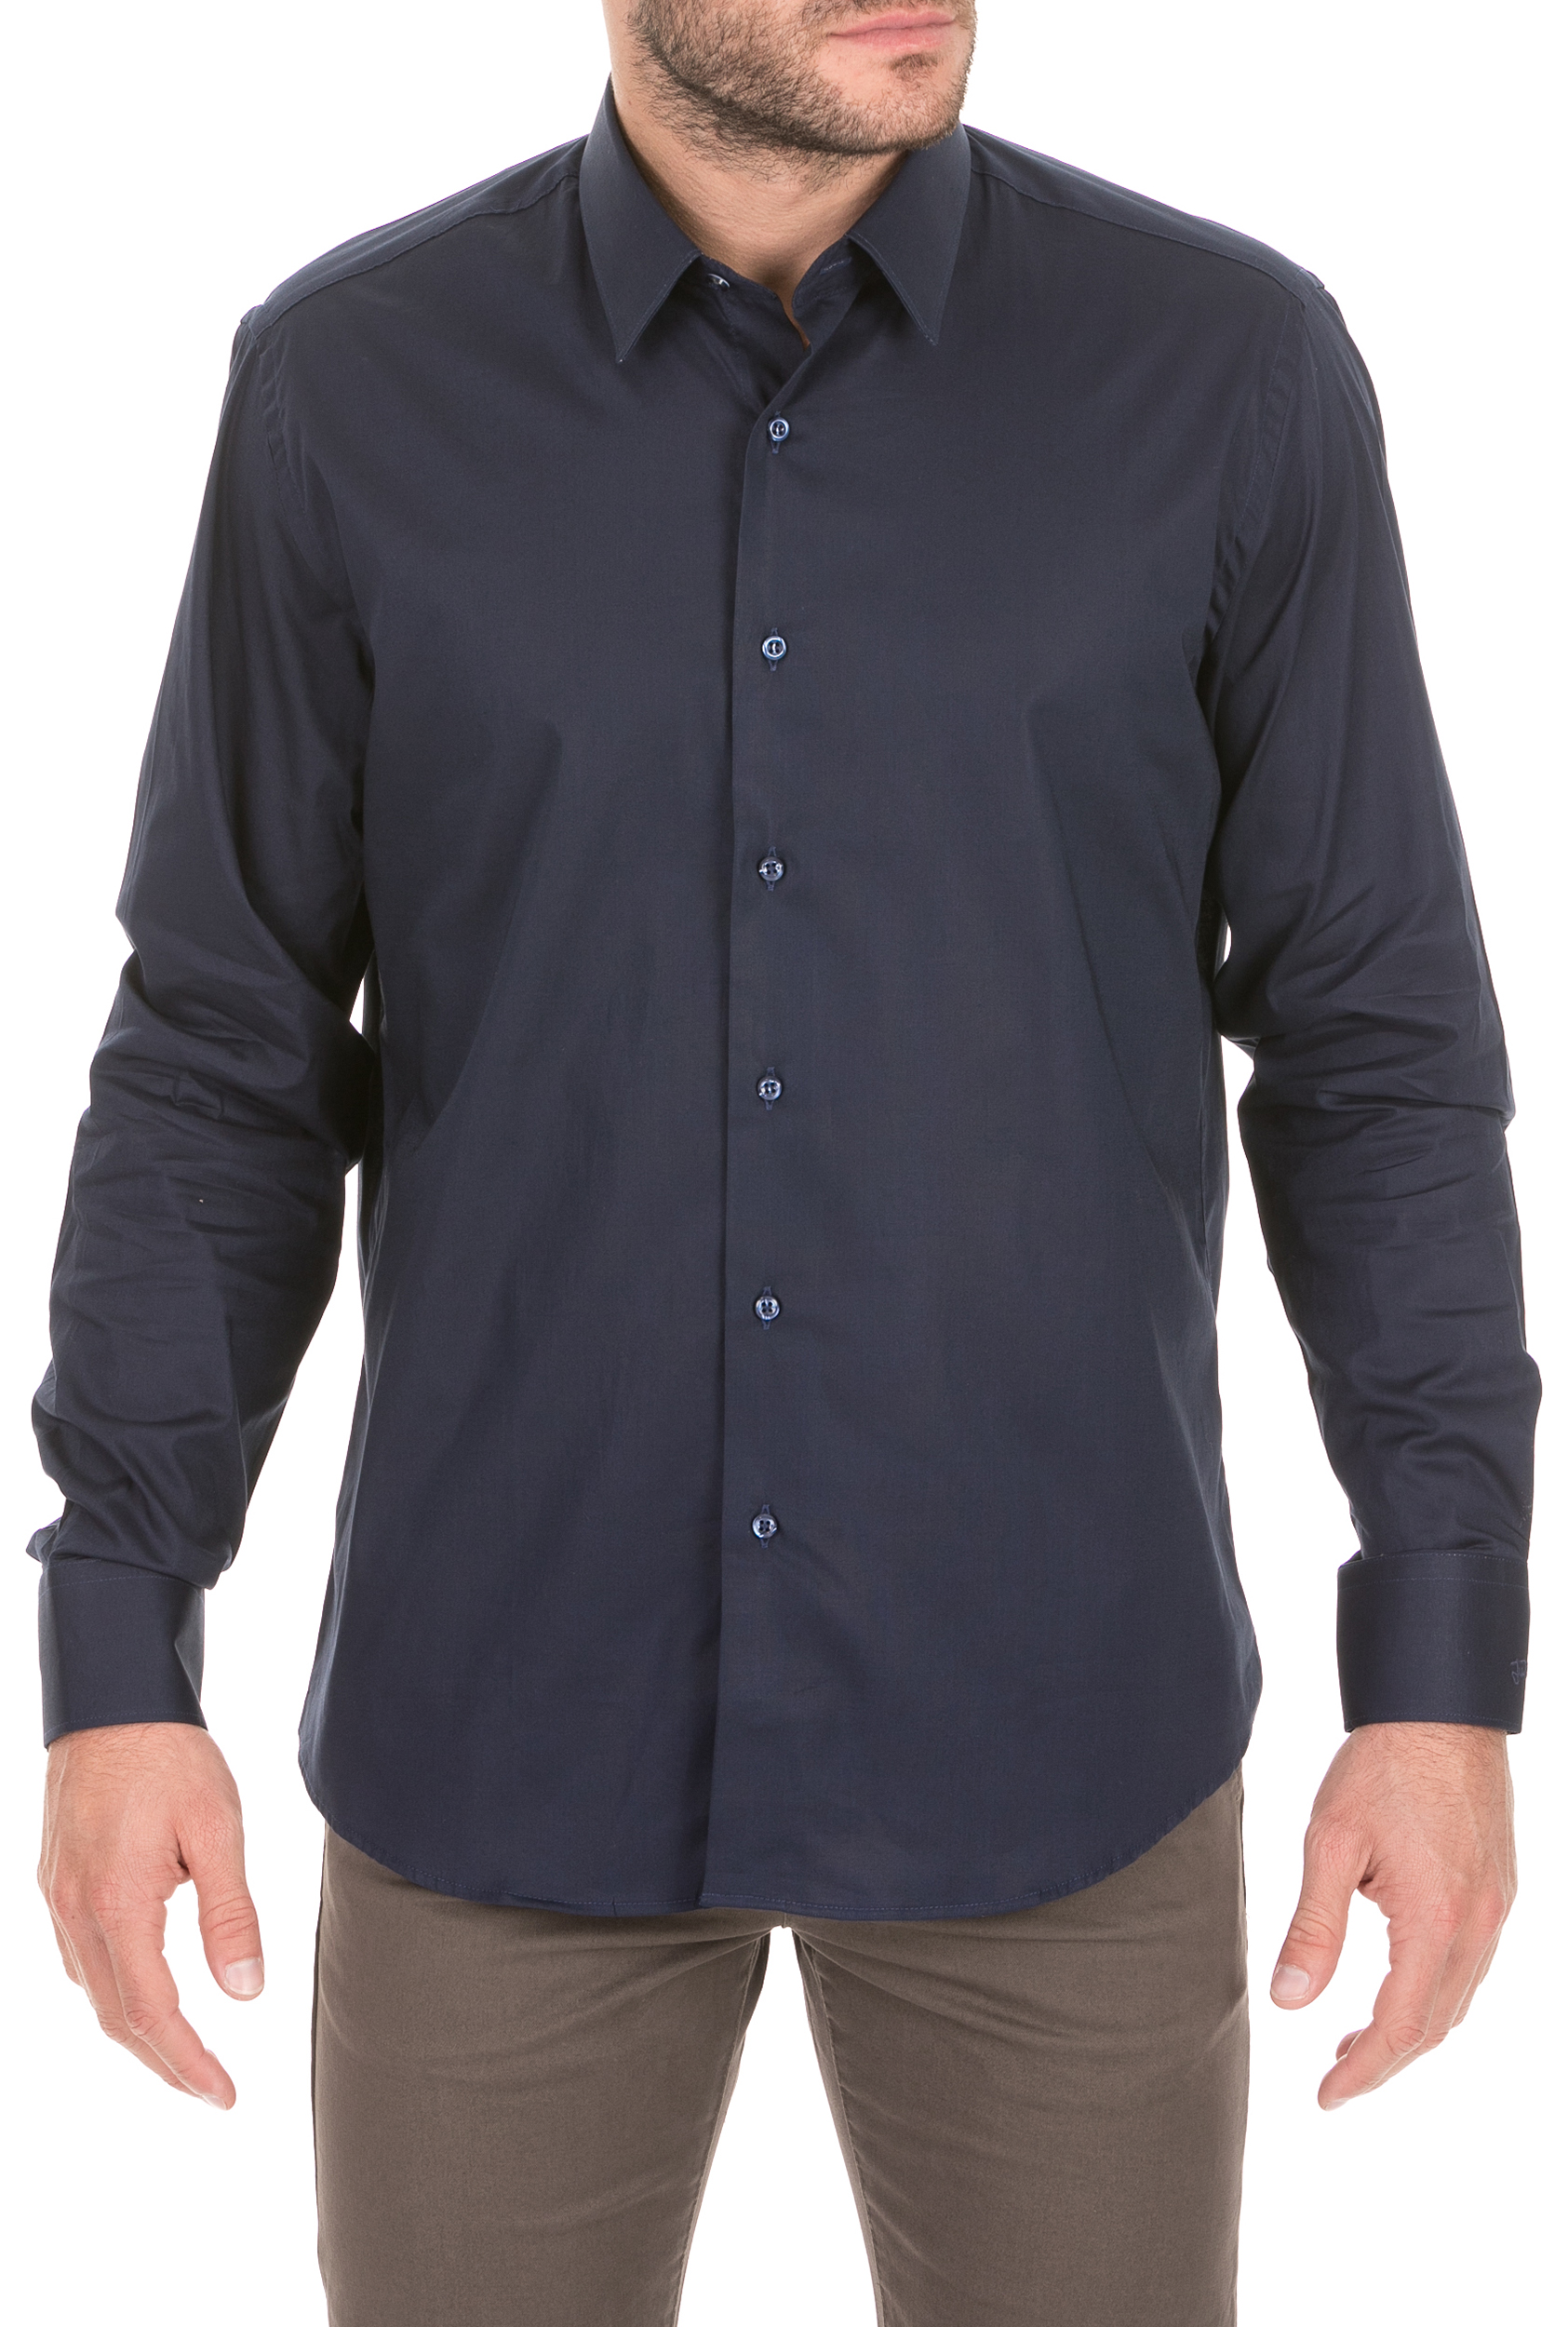 JUST CAVALLI - Ανδρικό πουκάμισο JUST CAVALLI μπλε Ανδρικά/Ρούχα/Πουκάμισα/Μακρυμάνικα